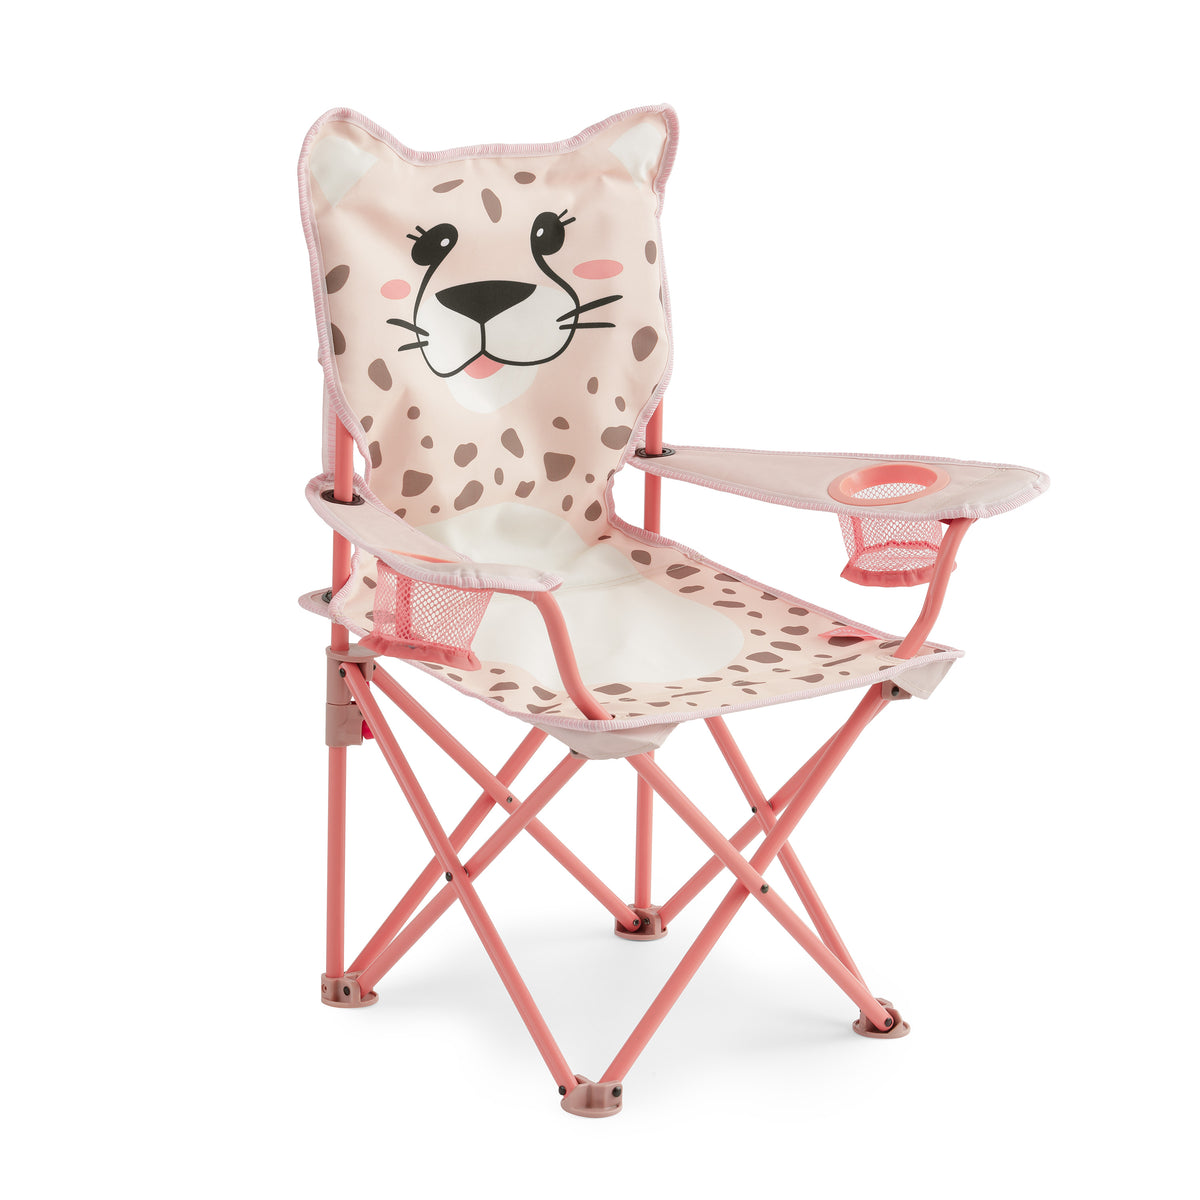 Cha Cha the Cheetah Kids' Camping Chair